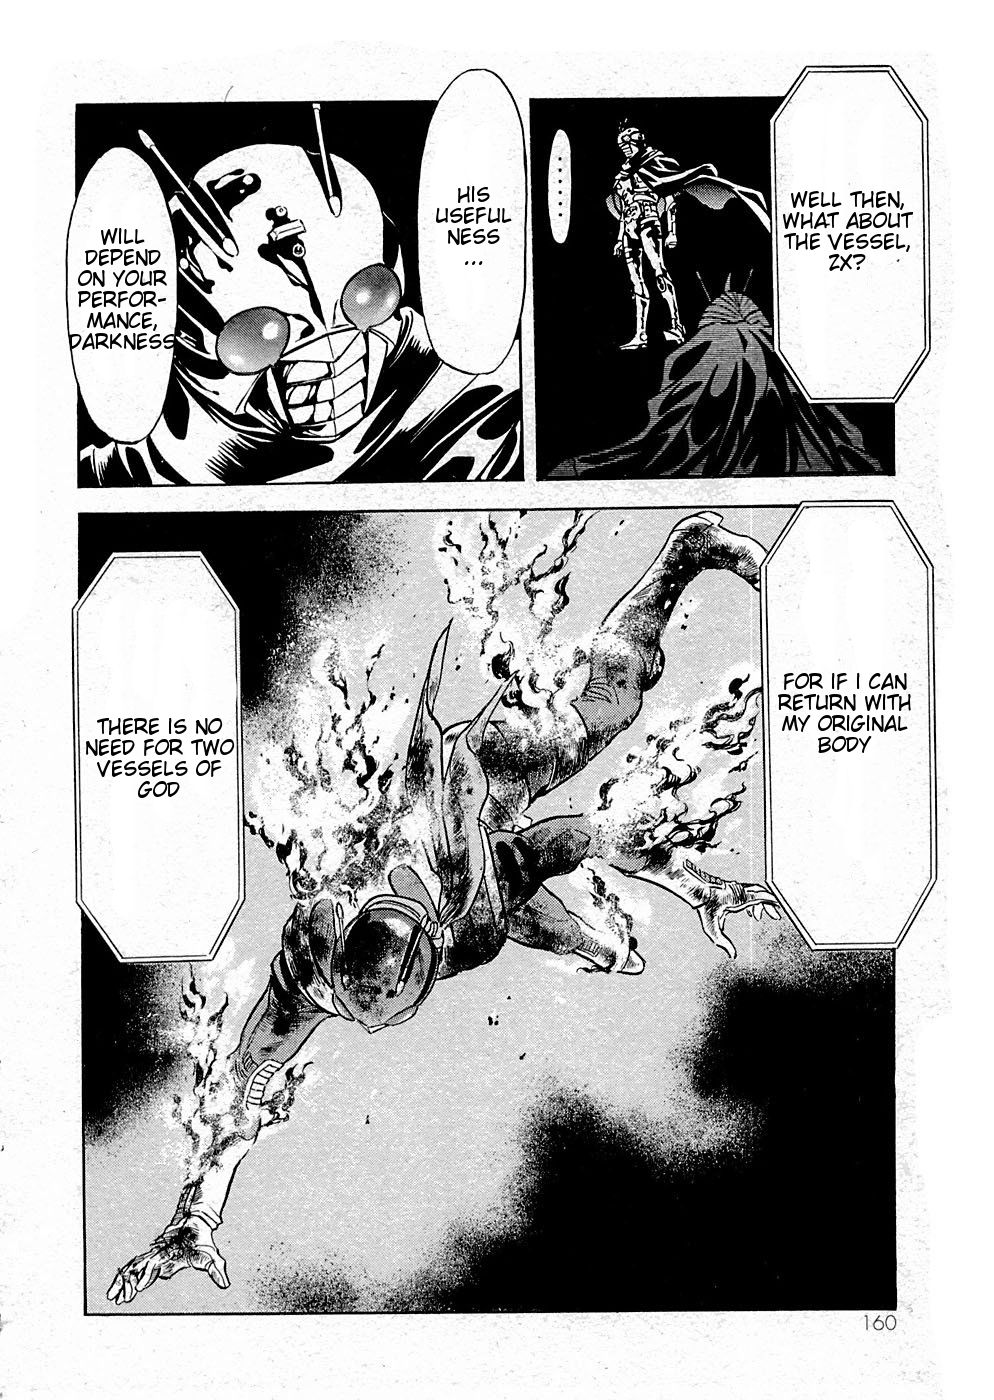 Kamen Rider SPIRITS Vol. 11 Ch. 68 Training